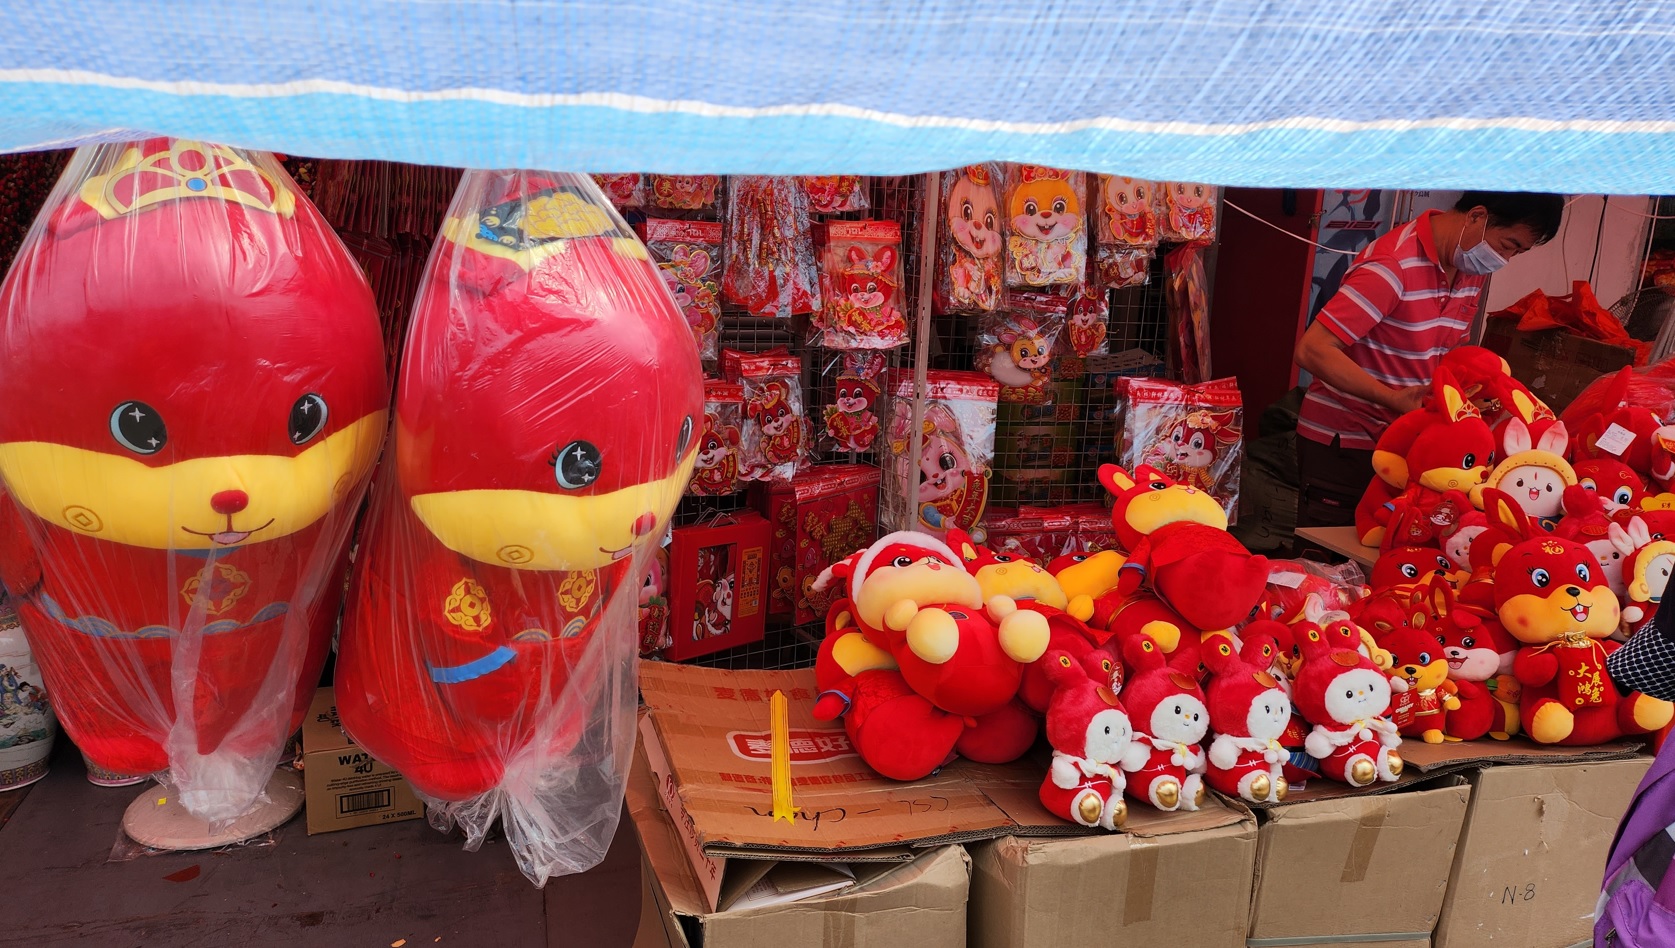 Shops of Chinatown street market